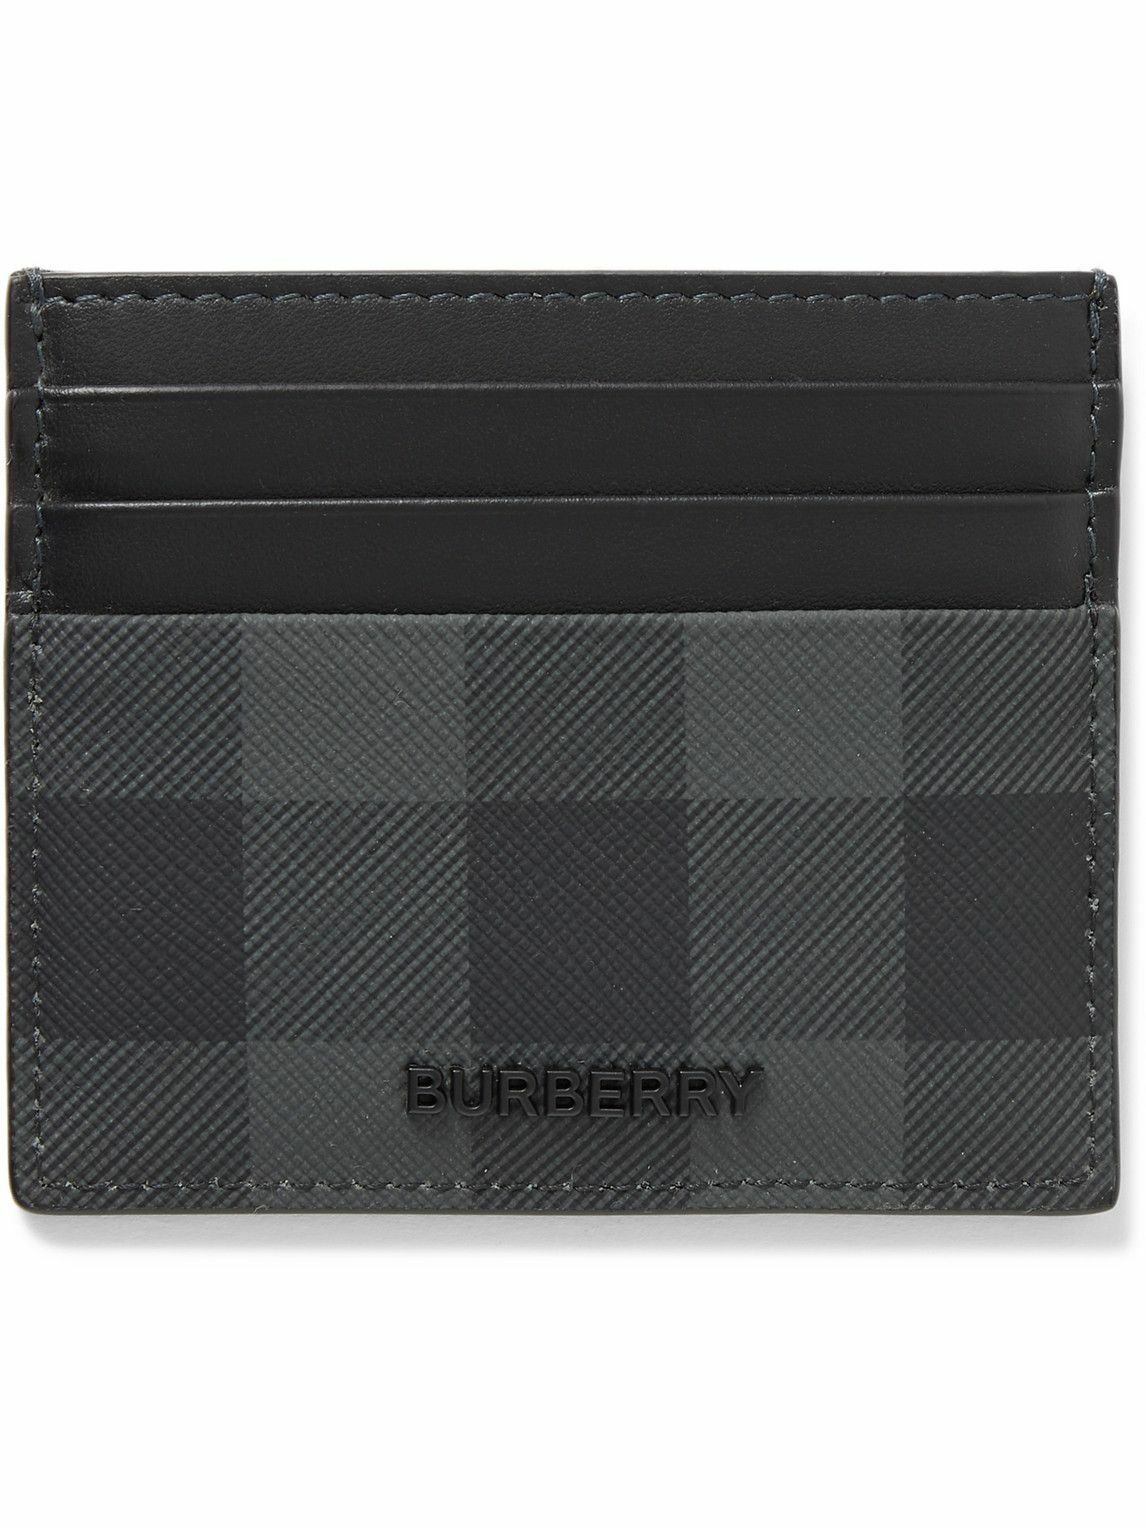 Burberry - Credit card holder for Man - Black - 8064460-A8900